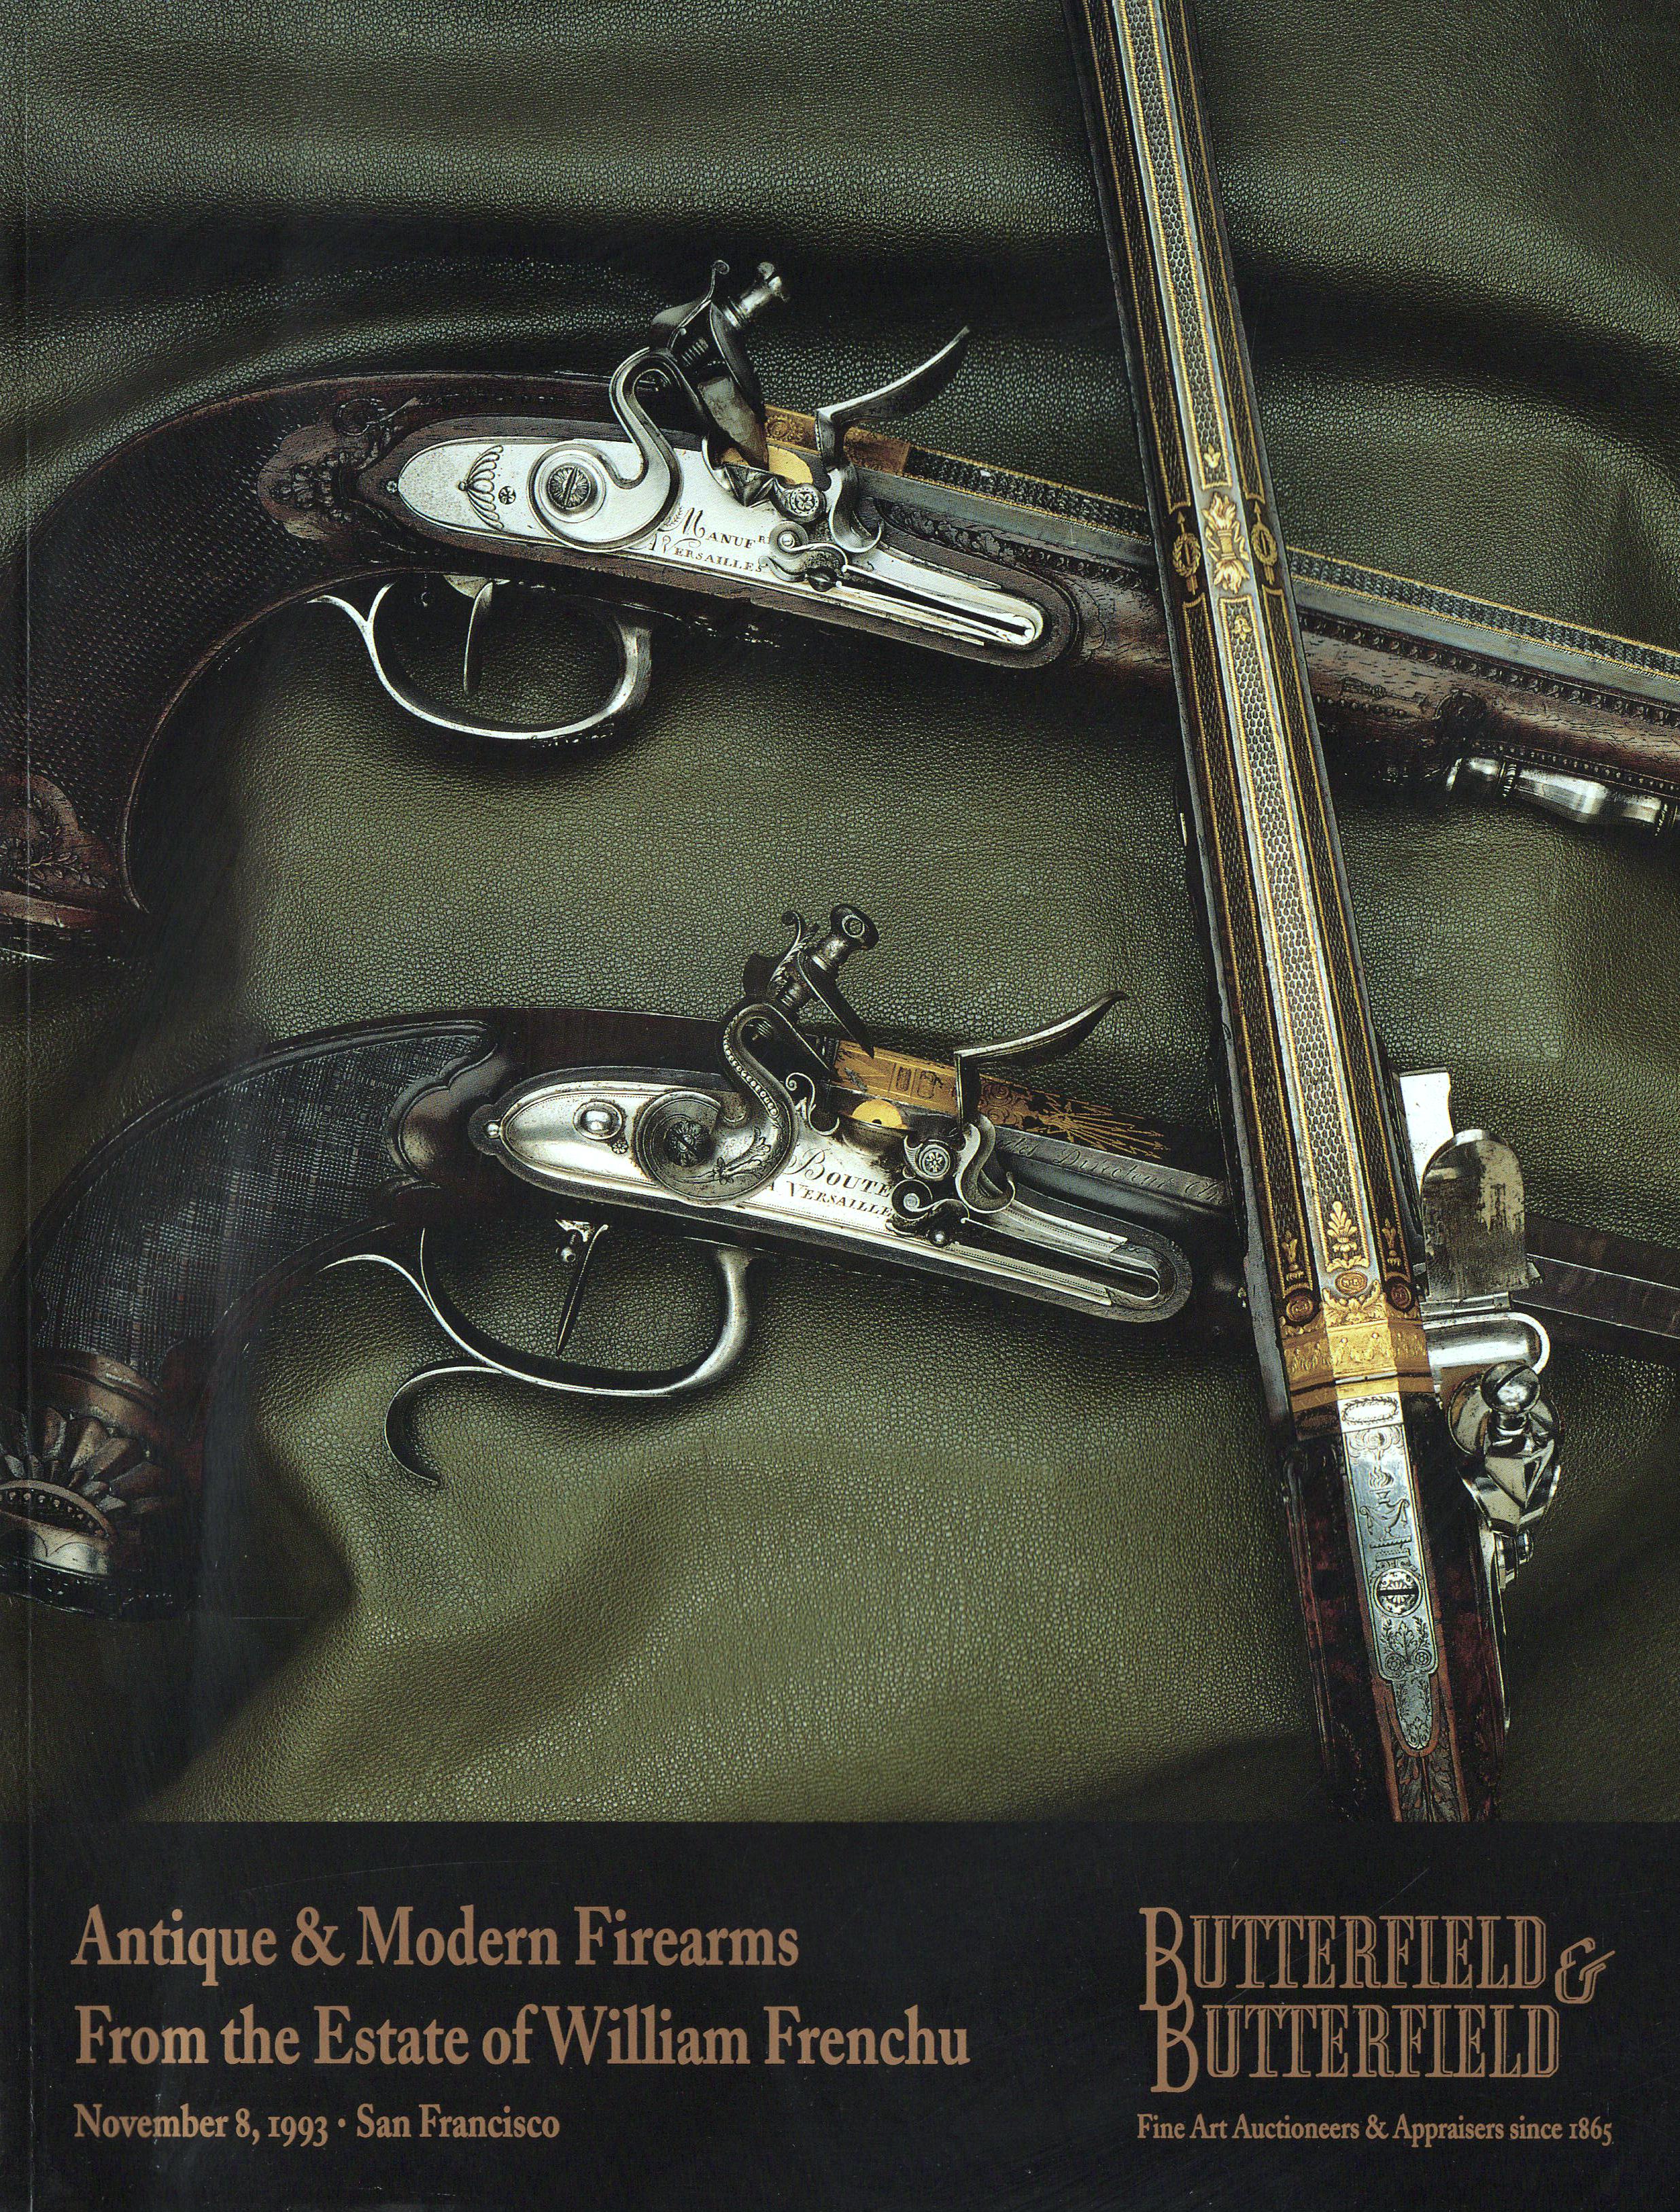 Butterfield & Butterfield November 1993 Antique & Modern Firearms from the Estat